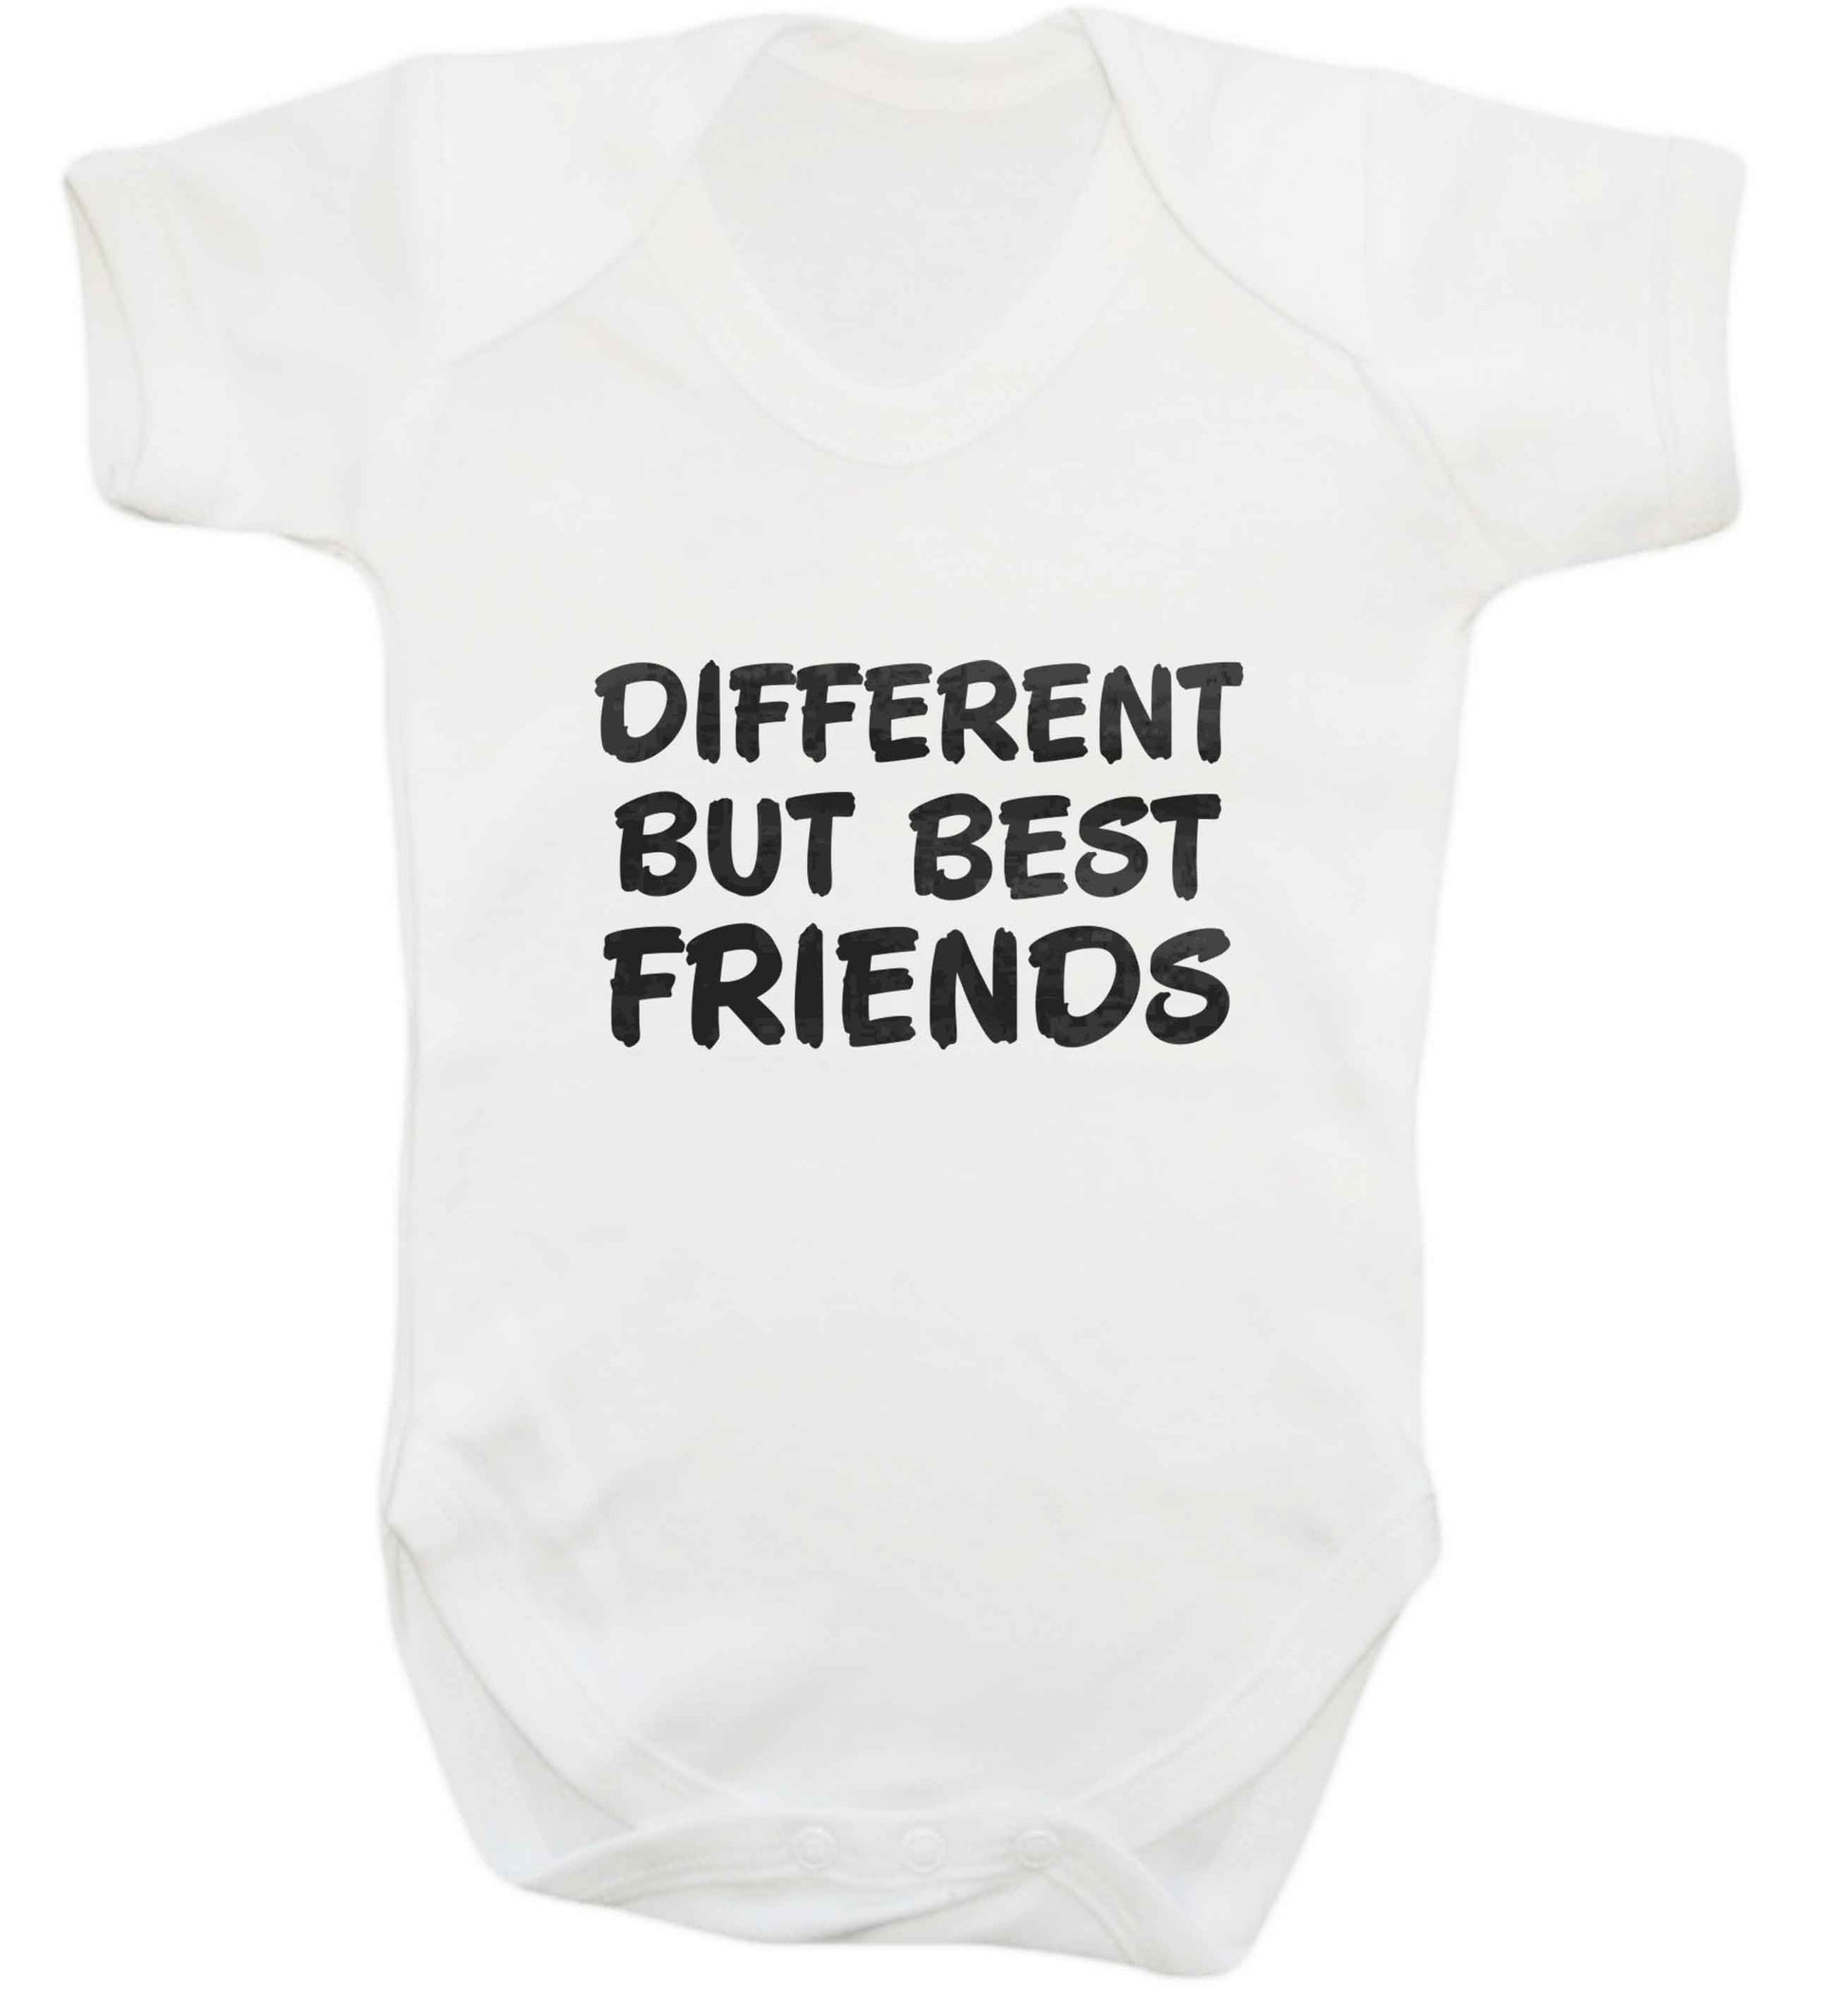 Different but best friends baby vest white 18-24 months